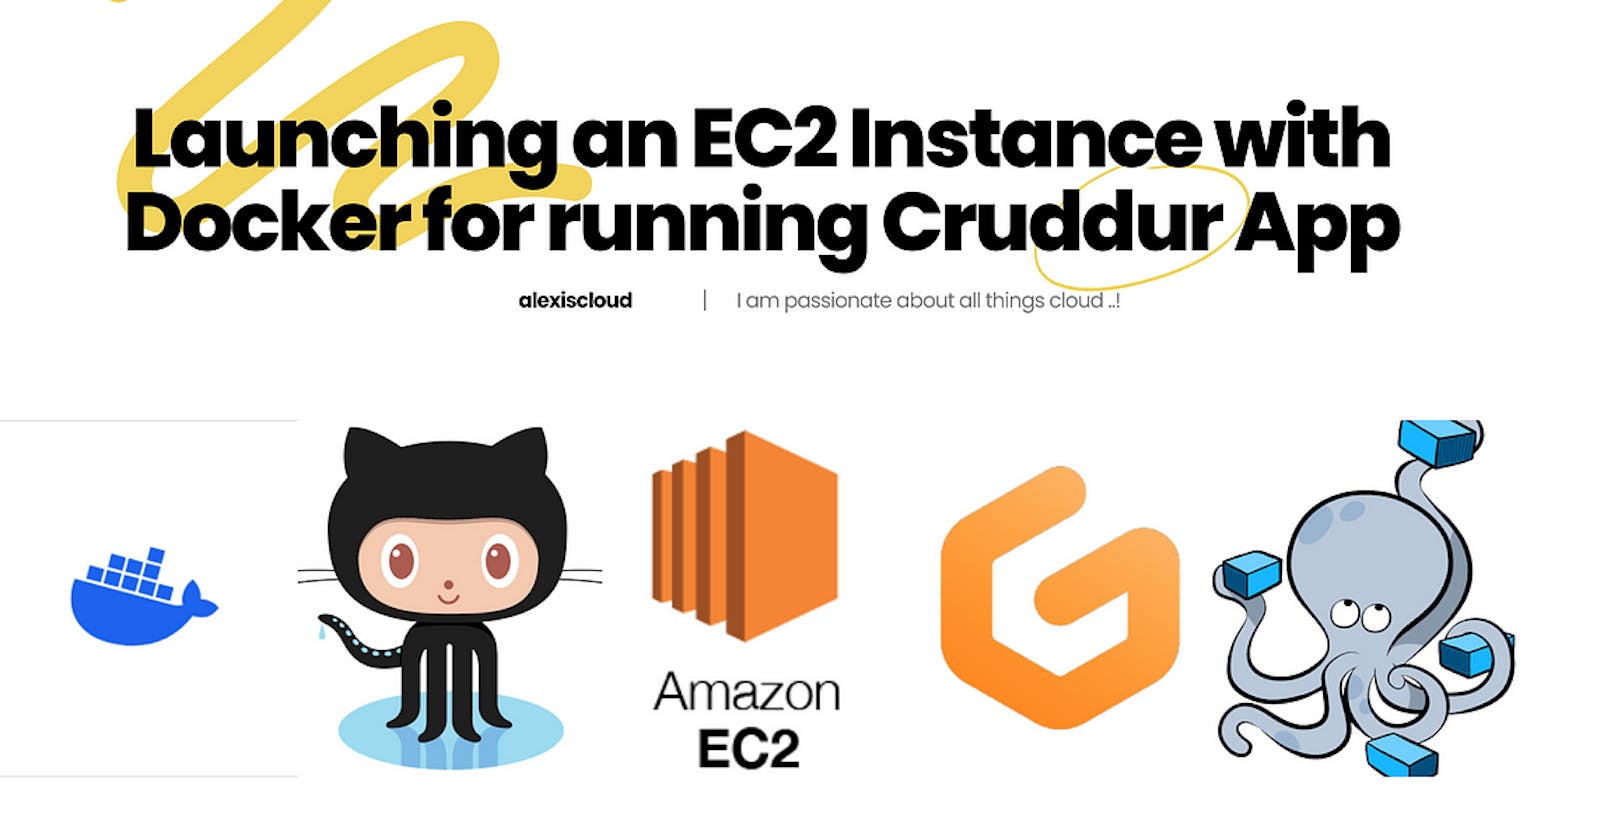 Launching an EC2 Instance with Docker for running Cruddur App